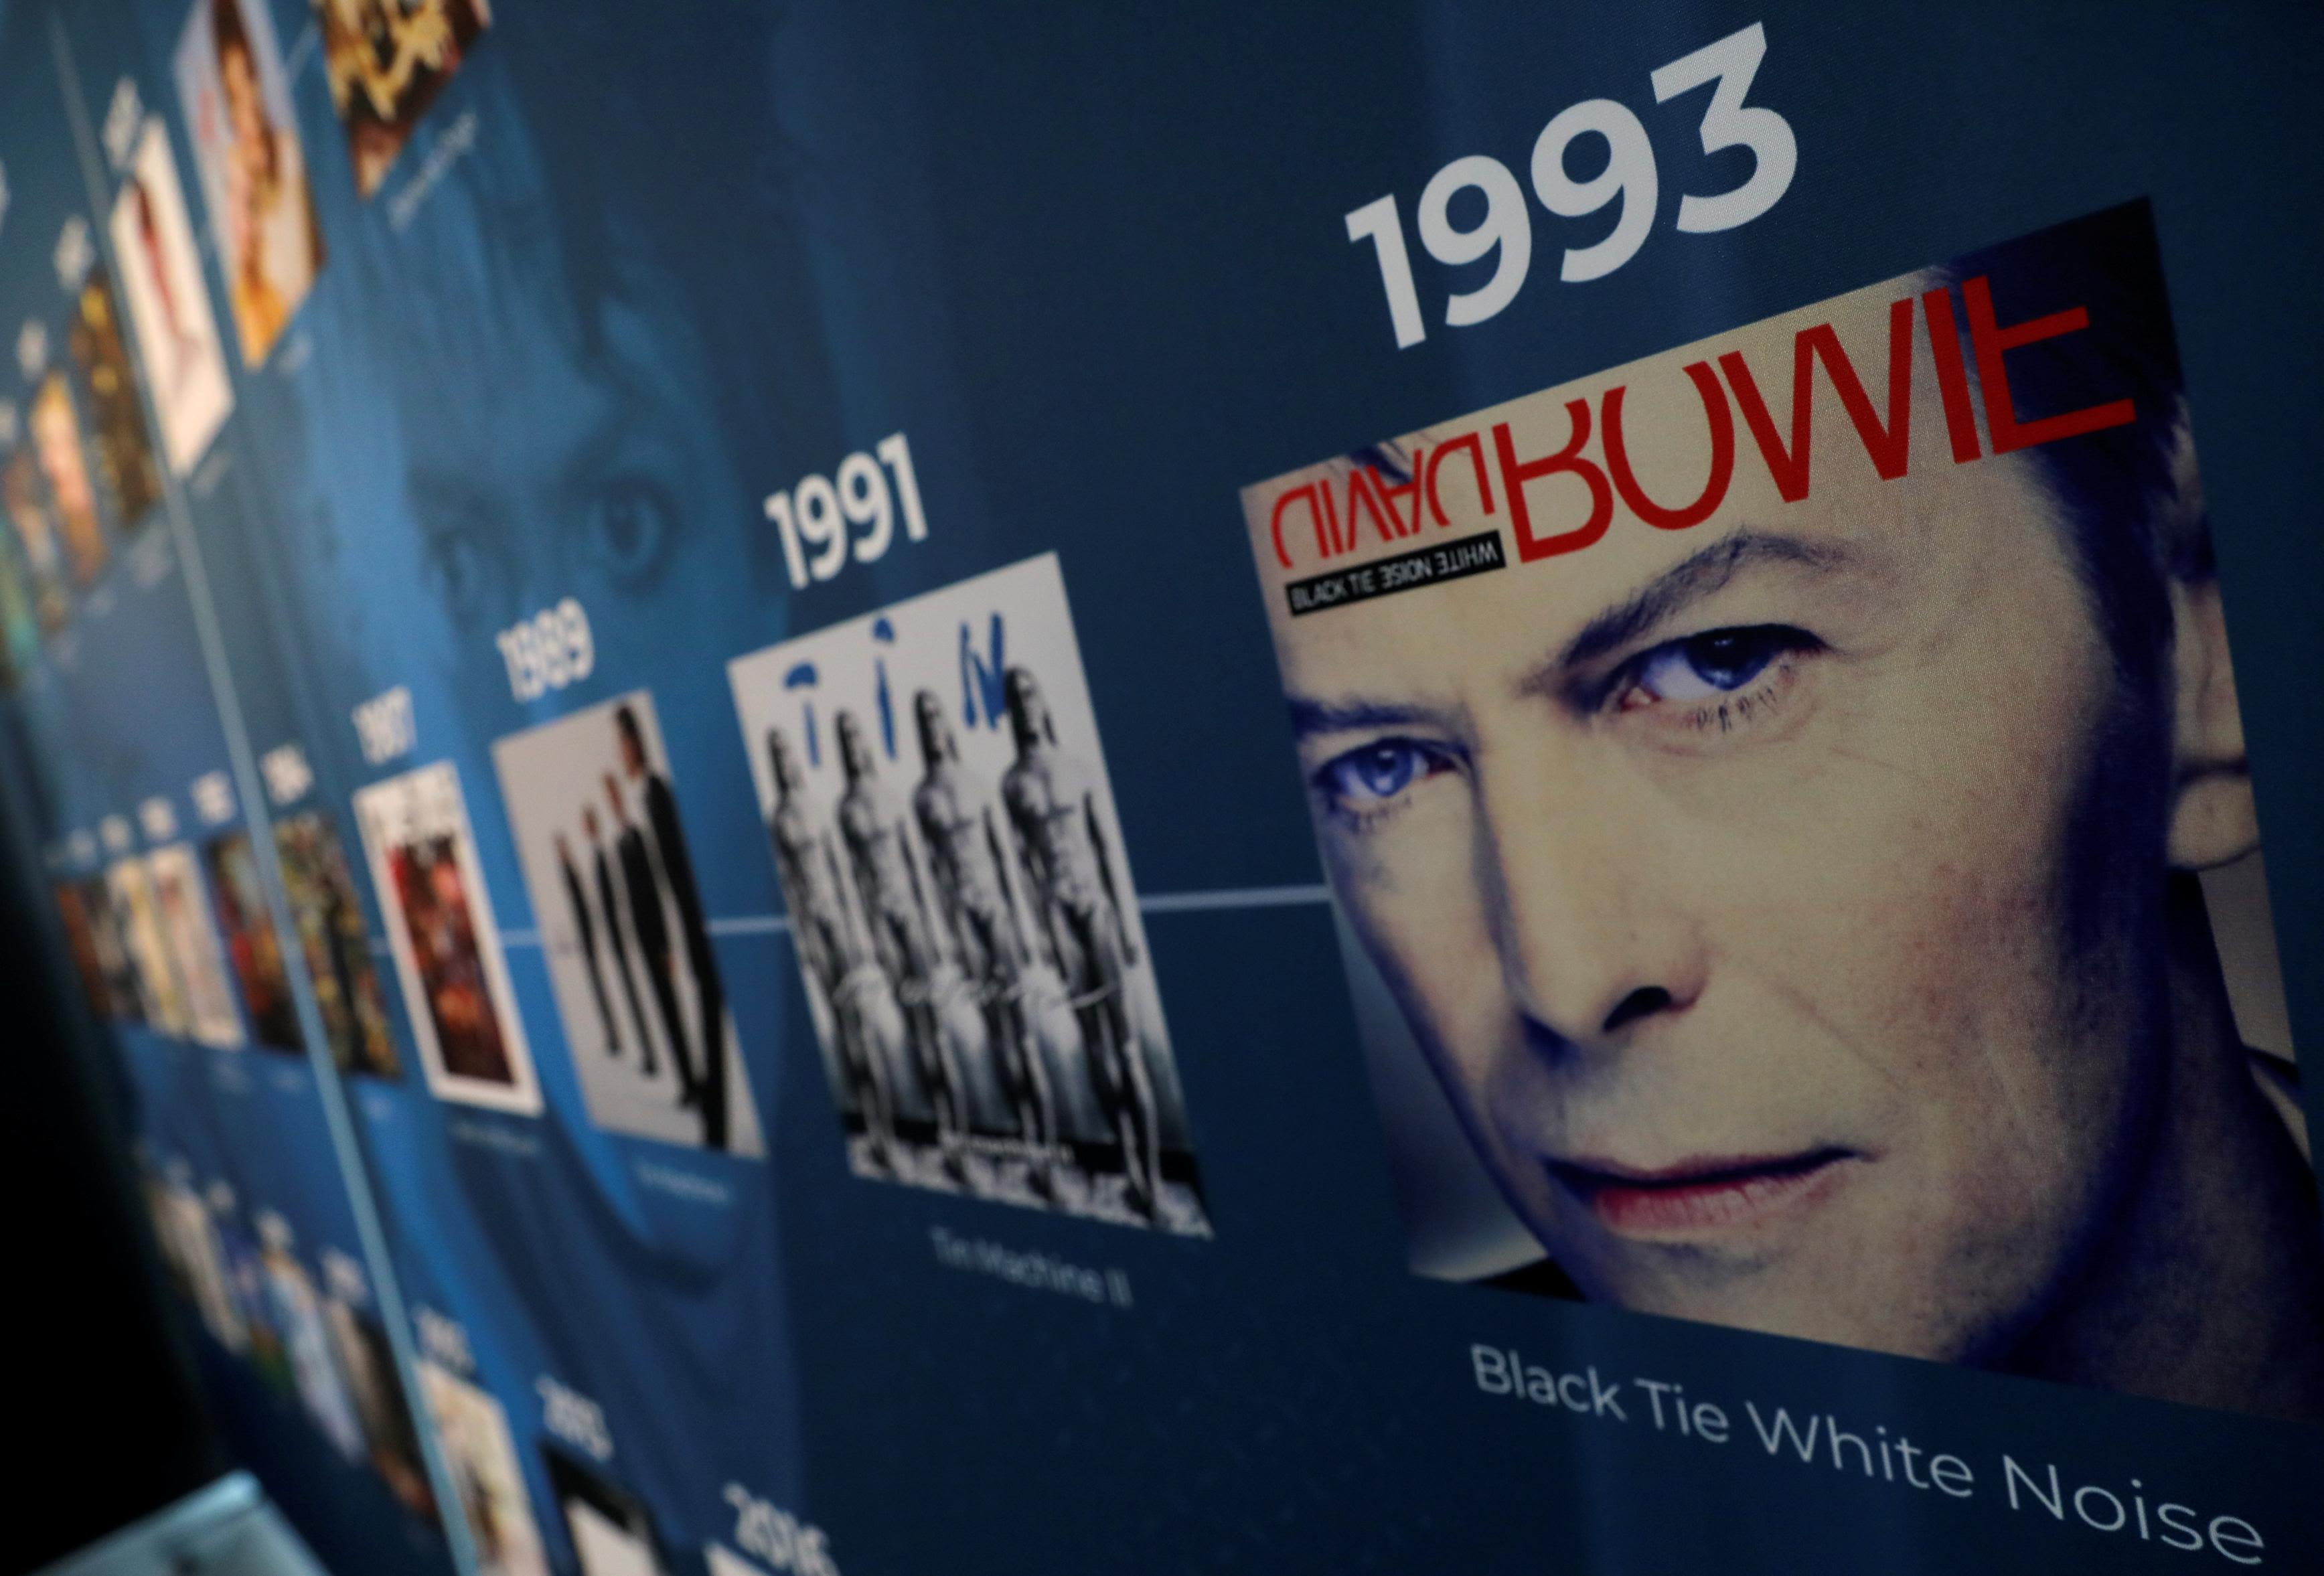 David Bowie Exhibition Poster